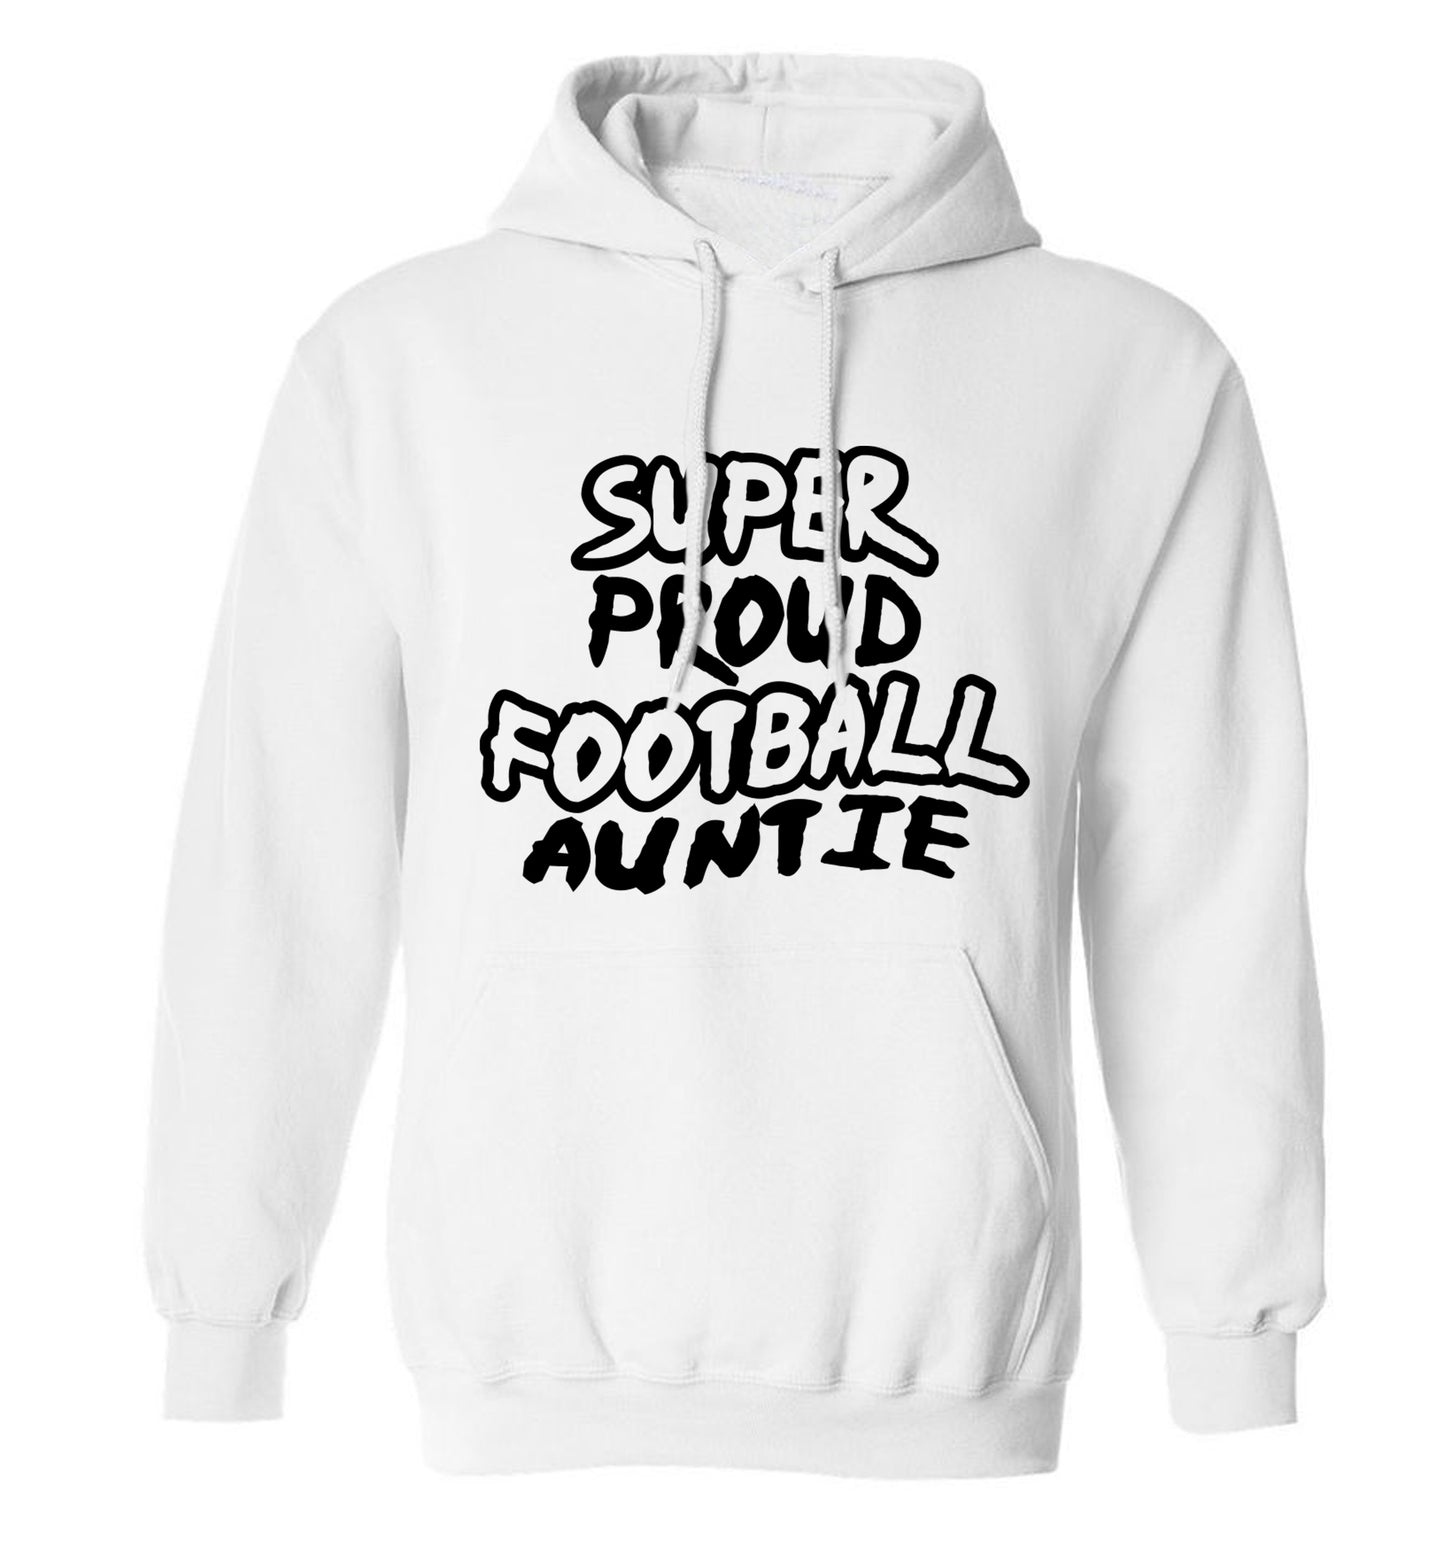 Super proud football auntie adults unisexwhite hoodie 2XL